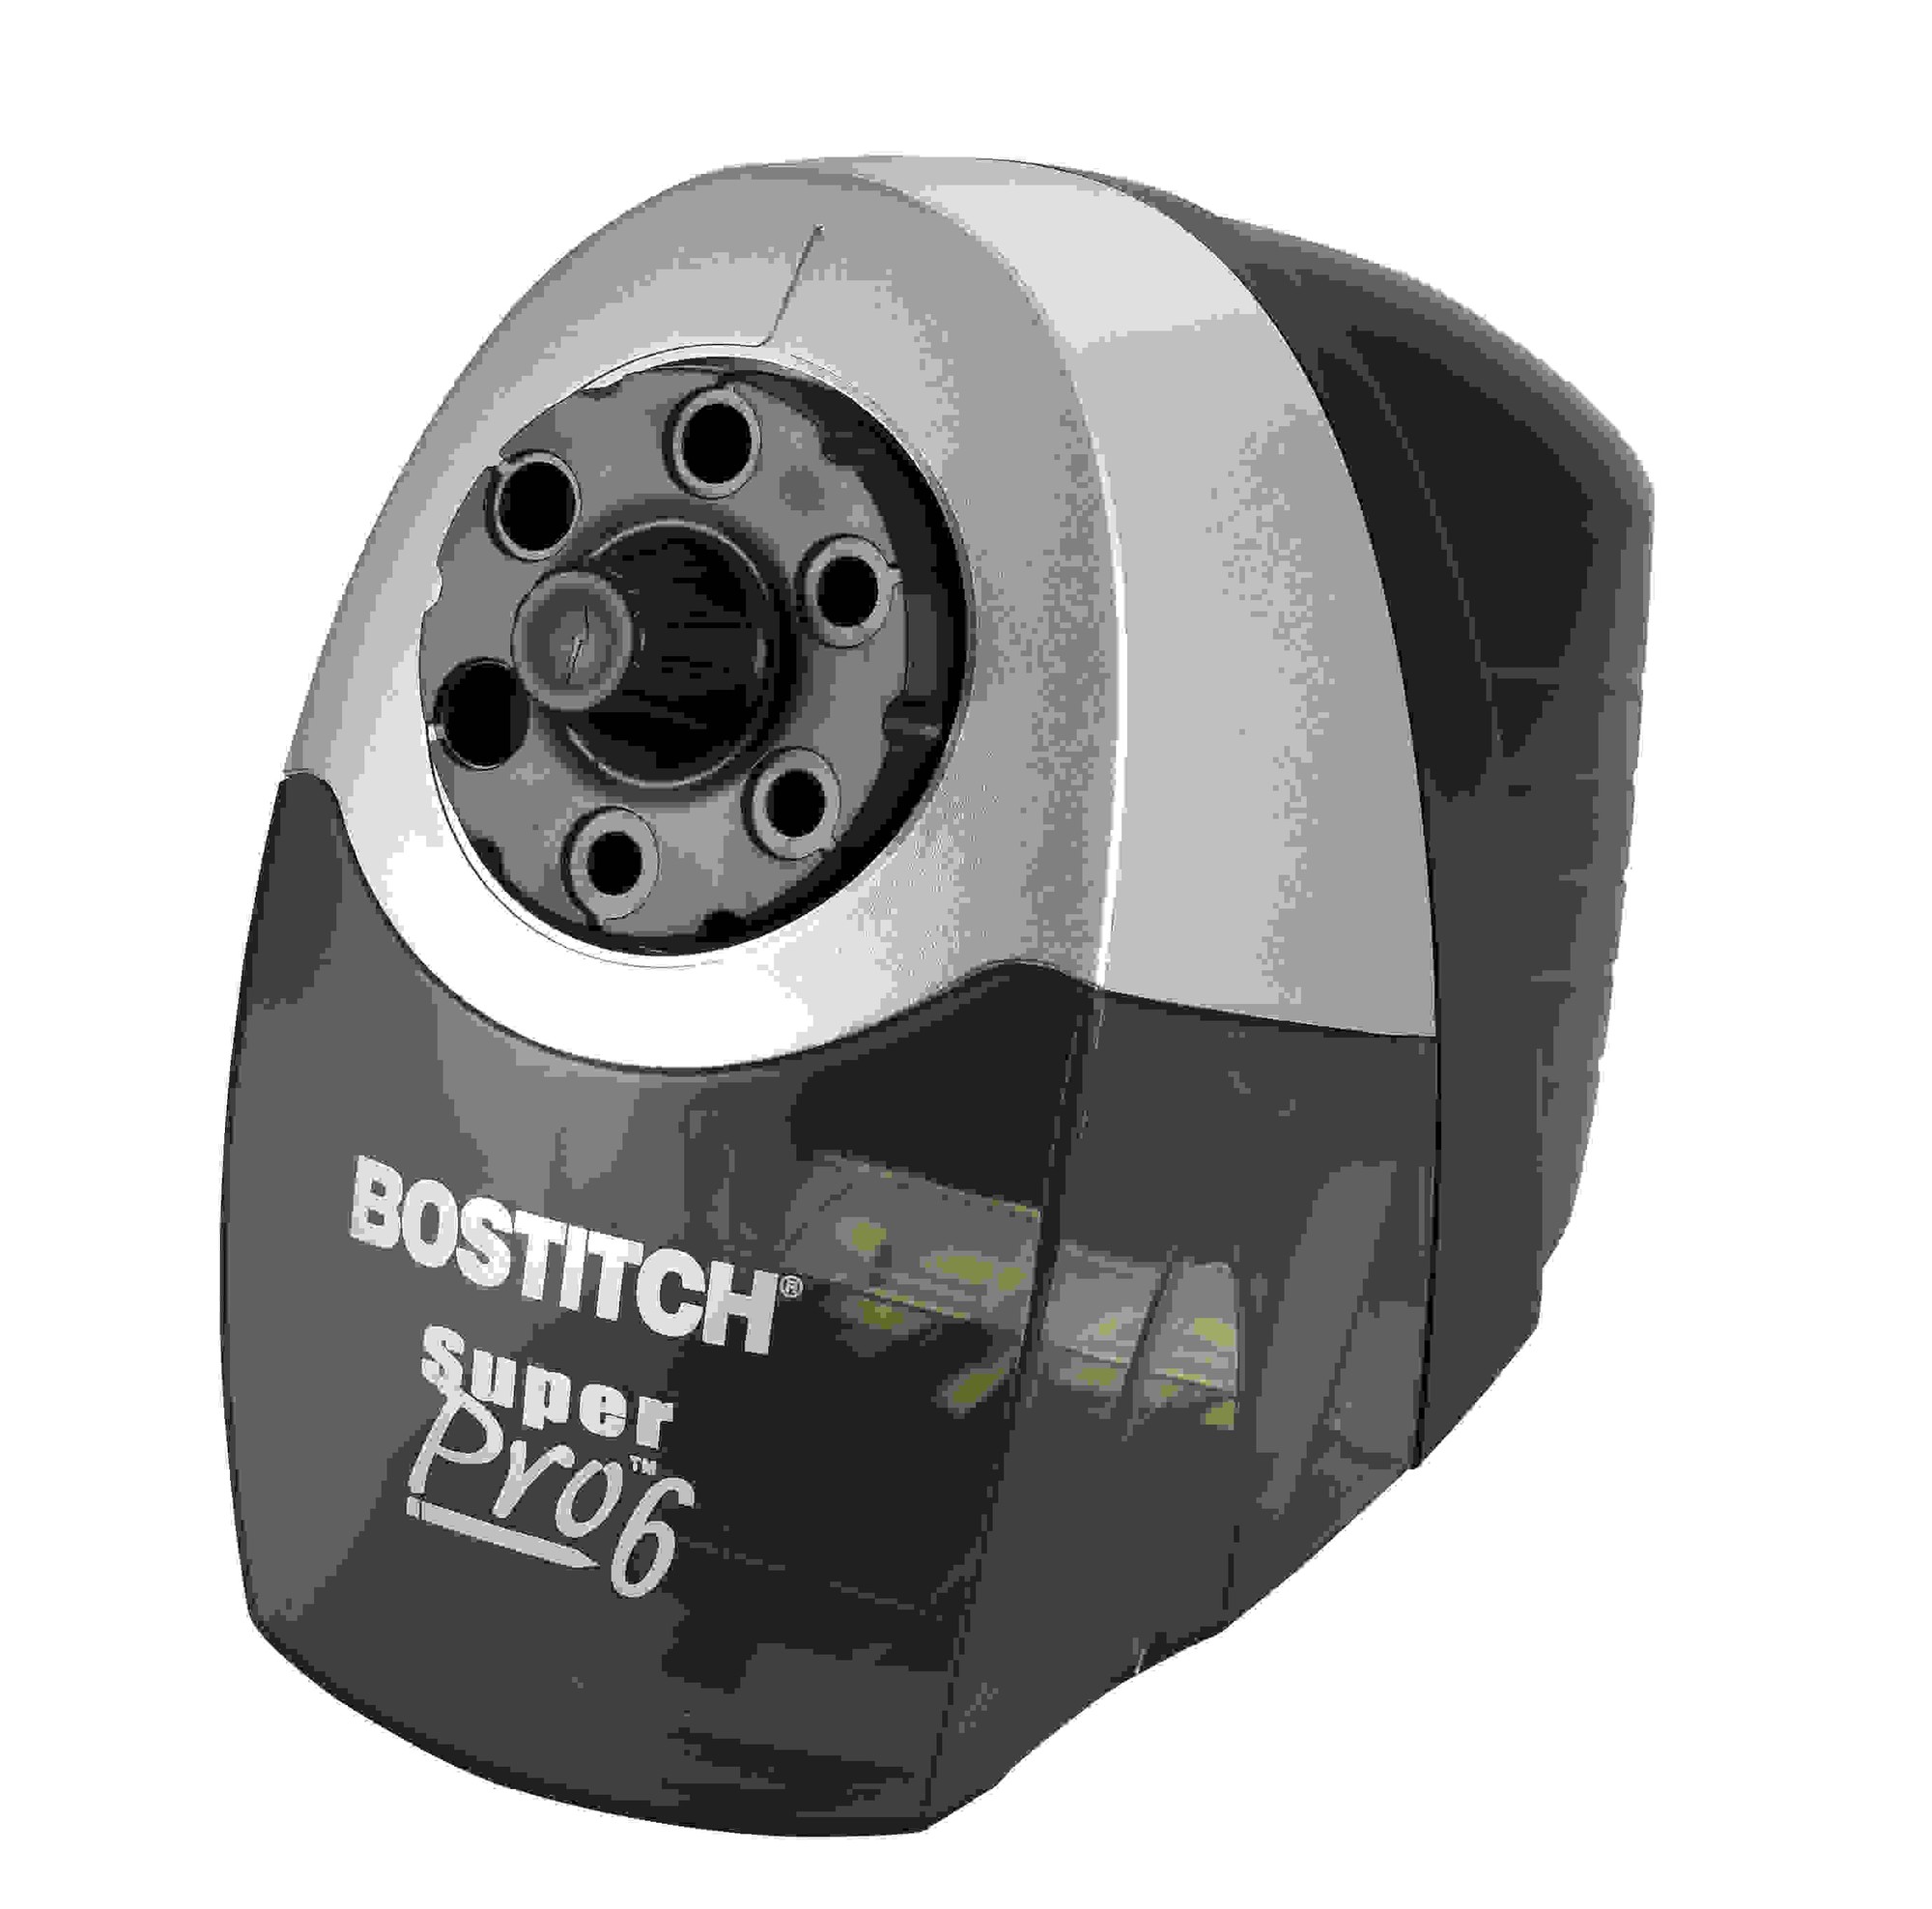 Bostitch Super Pro 6 Commercial Pencil Sharpener - Desktop - 6 Hole(s) - 7.5" Height x 5" Width x 9" Depth - Gray, Black - 1 Eac